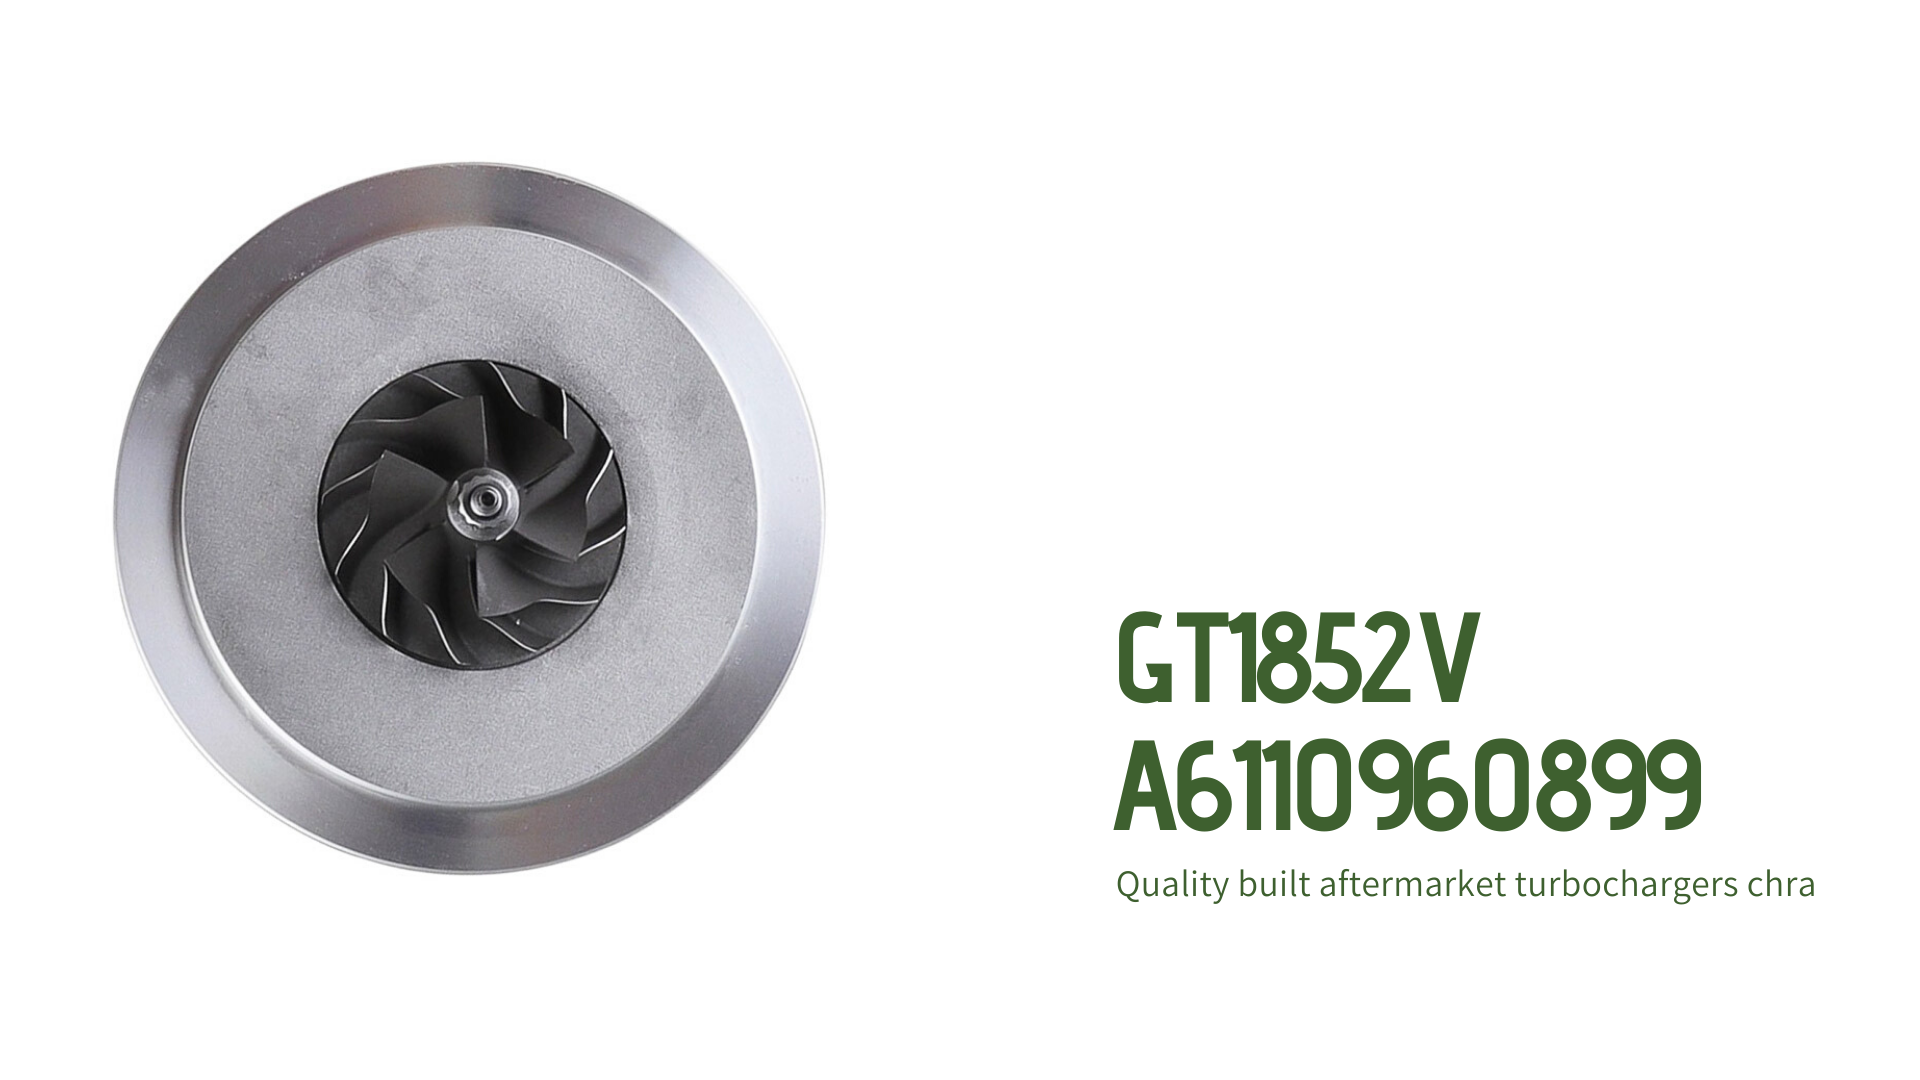 A6110960899 Cartridge For GT1852V 709836-5004S Turbocharger